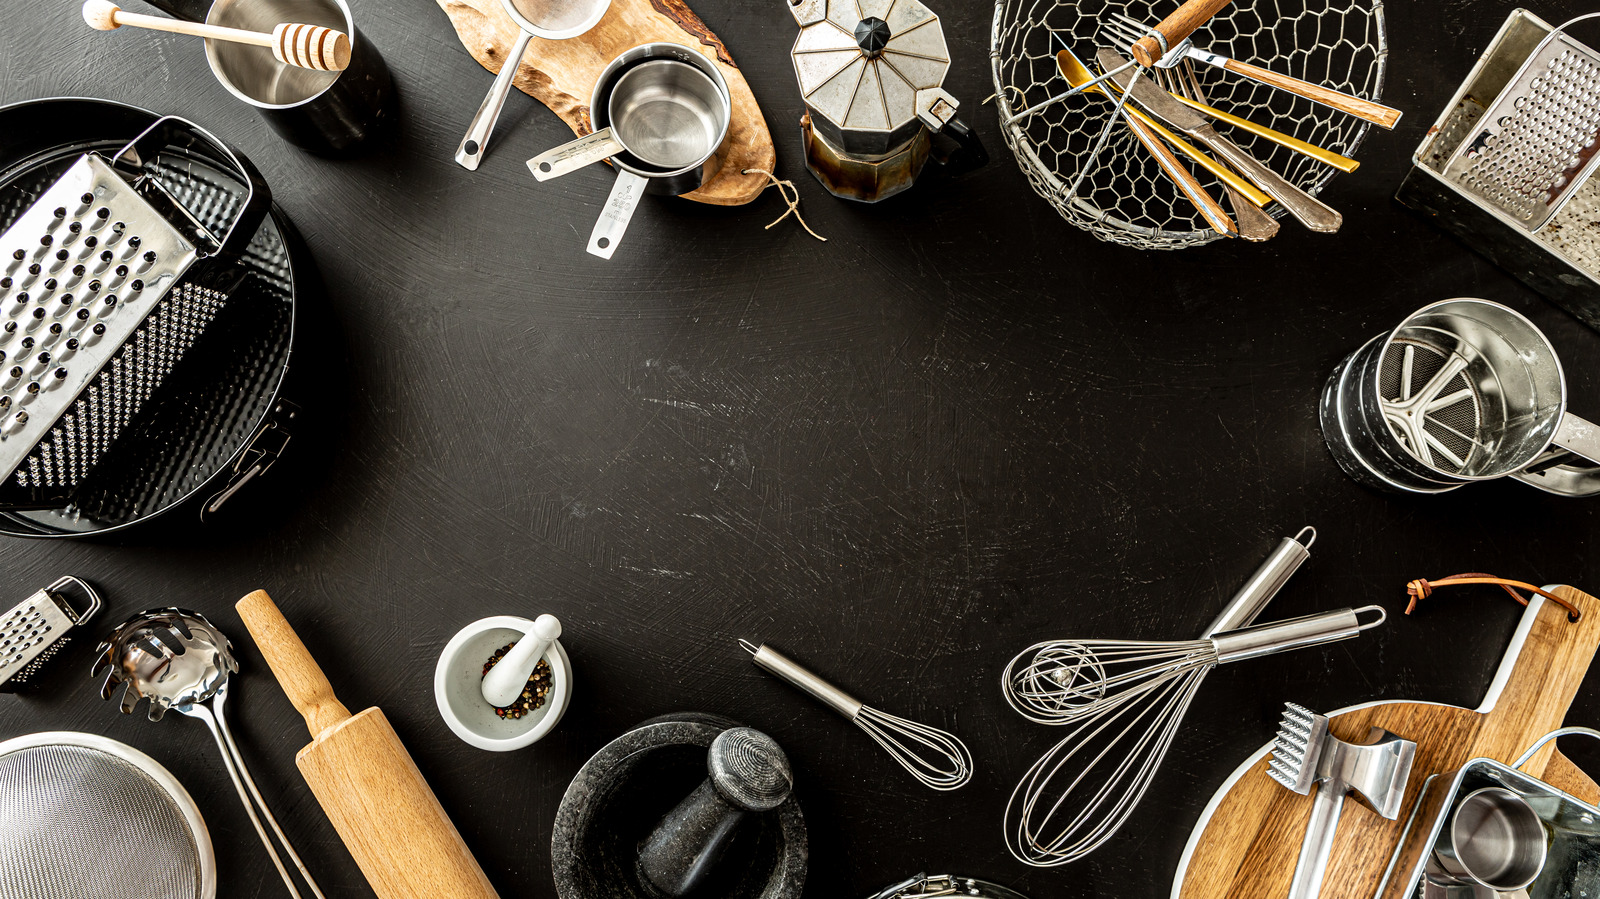 20 Genius, Super Useful Kitchen Tools  Modern kitchen gadgets, Kitchen  gadgets, Kitchen tools and gadgets